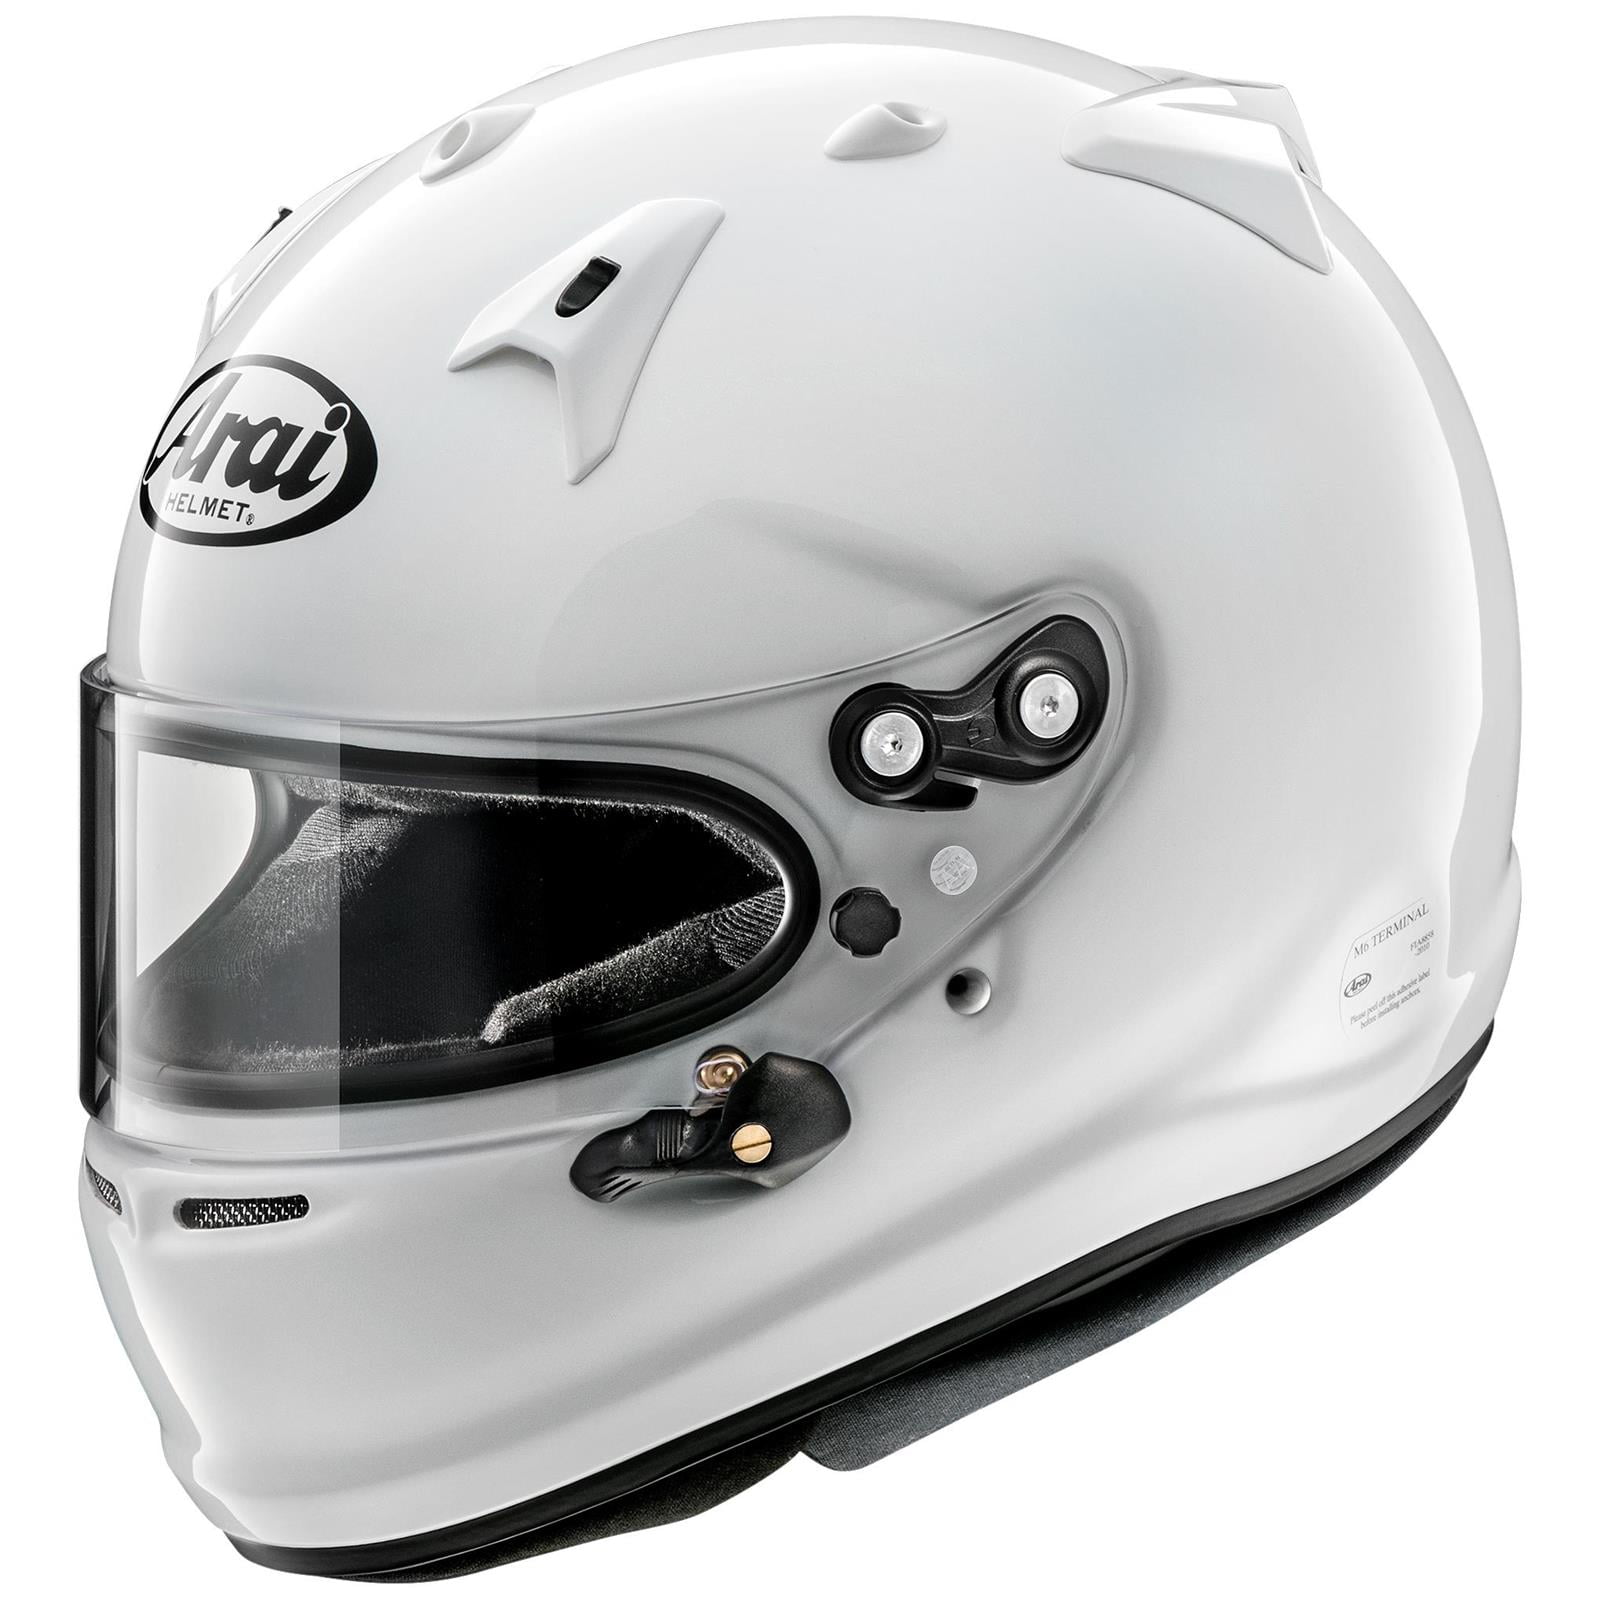 Black 7mm Arai RX-Q Replacement Parts Interior Pad III Street Motorcycle Helmet Accessories 